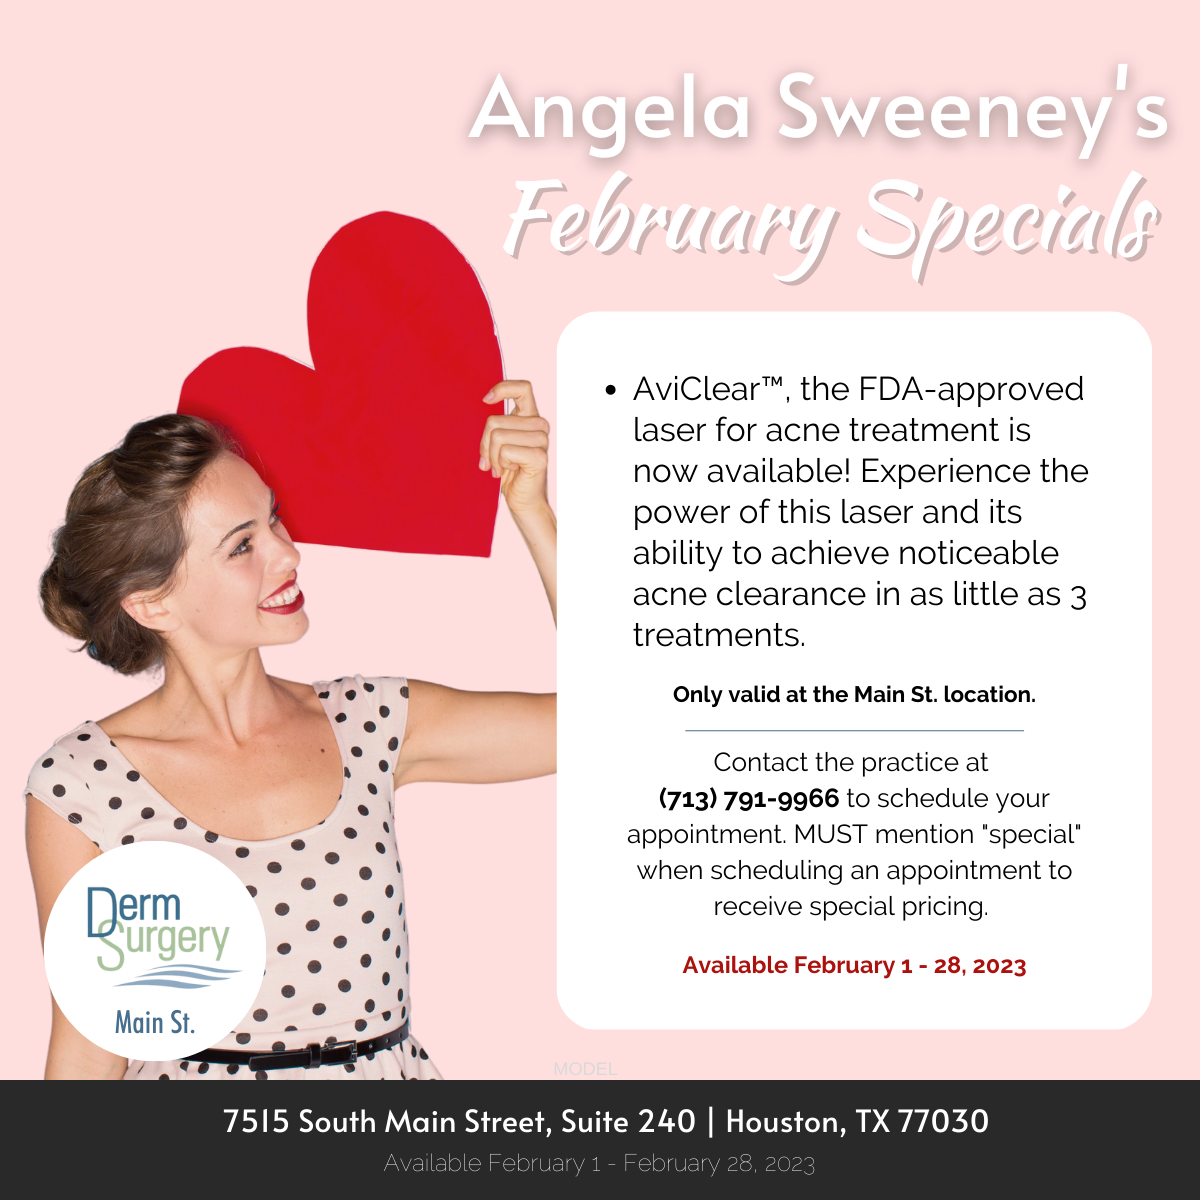 Angela Sweeney's February Specials 2023